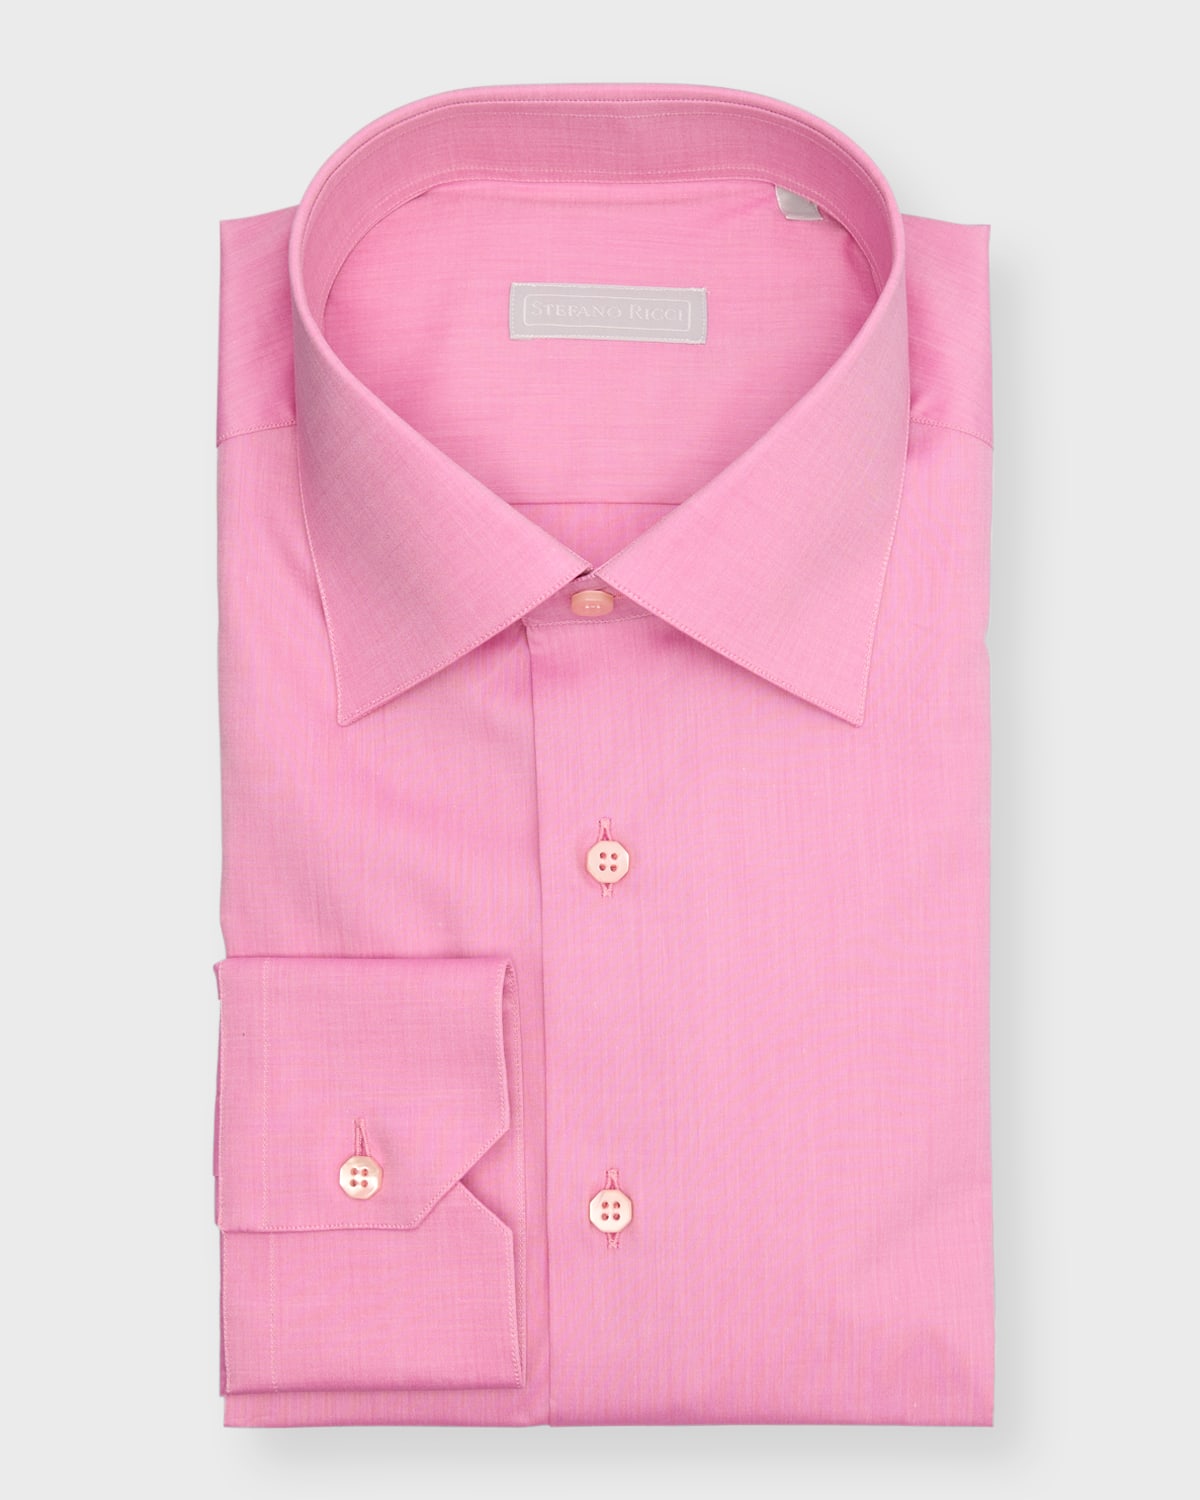 Stefano Ricci Men's Cotton Dress Shirt In Dark Pink